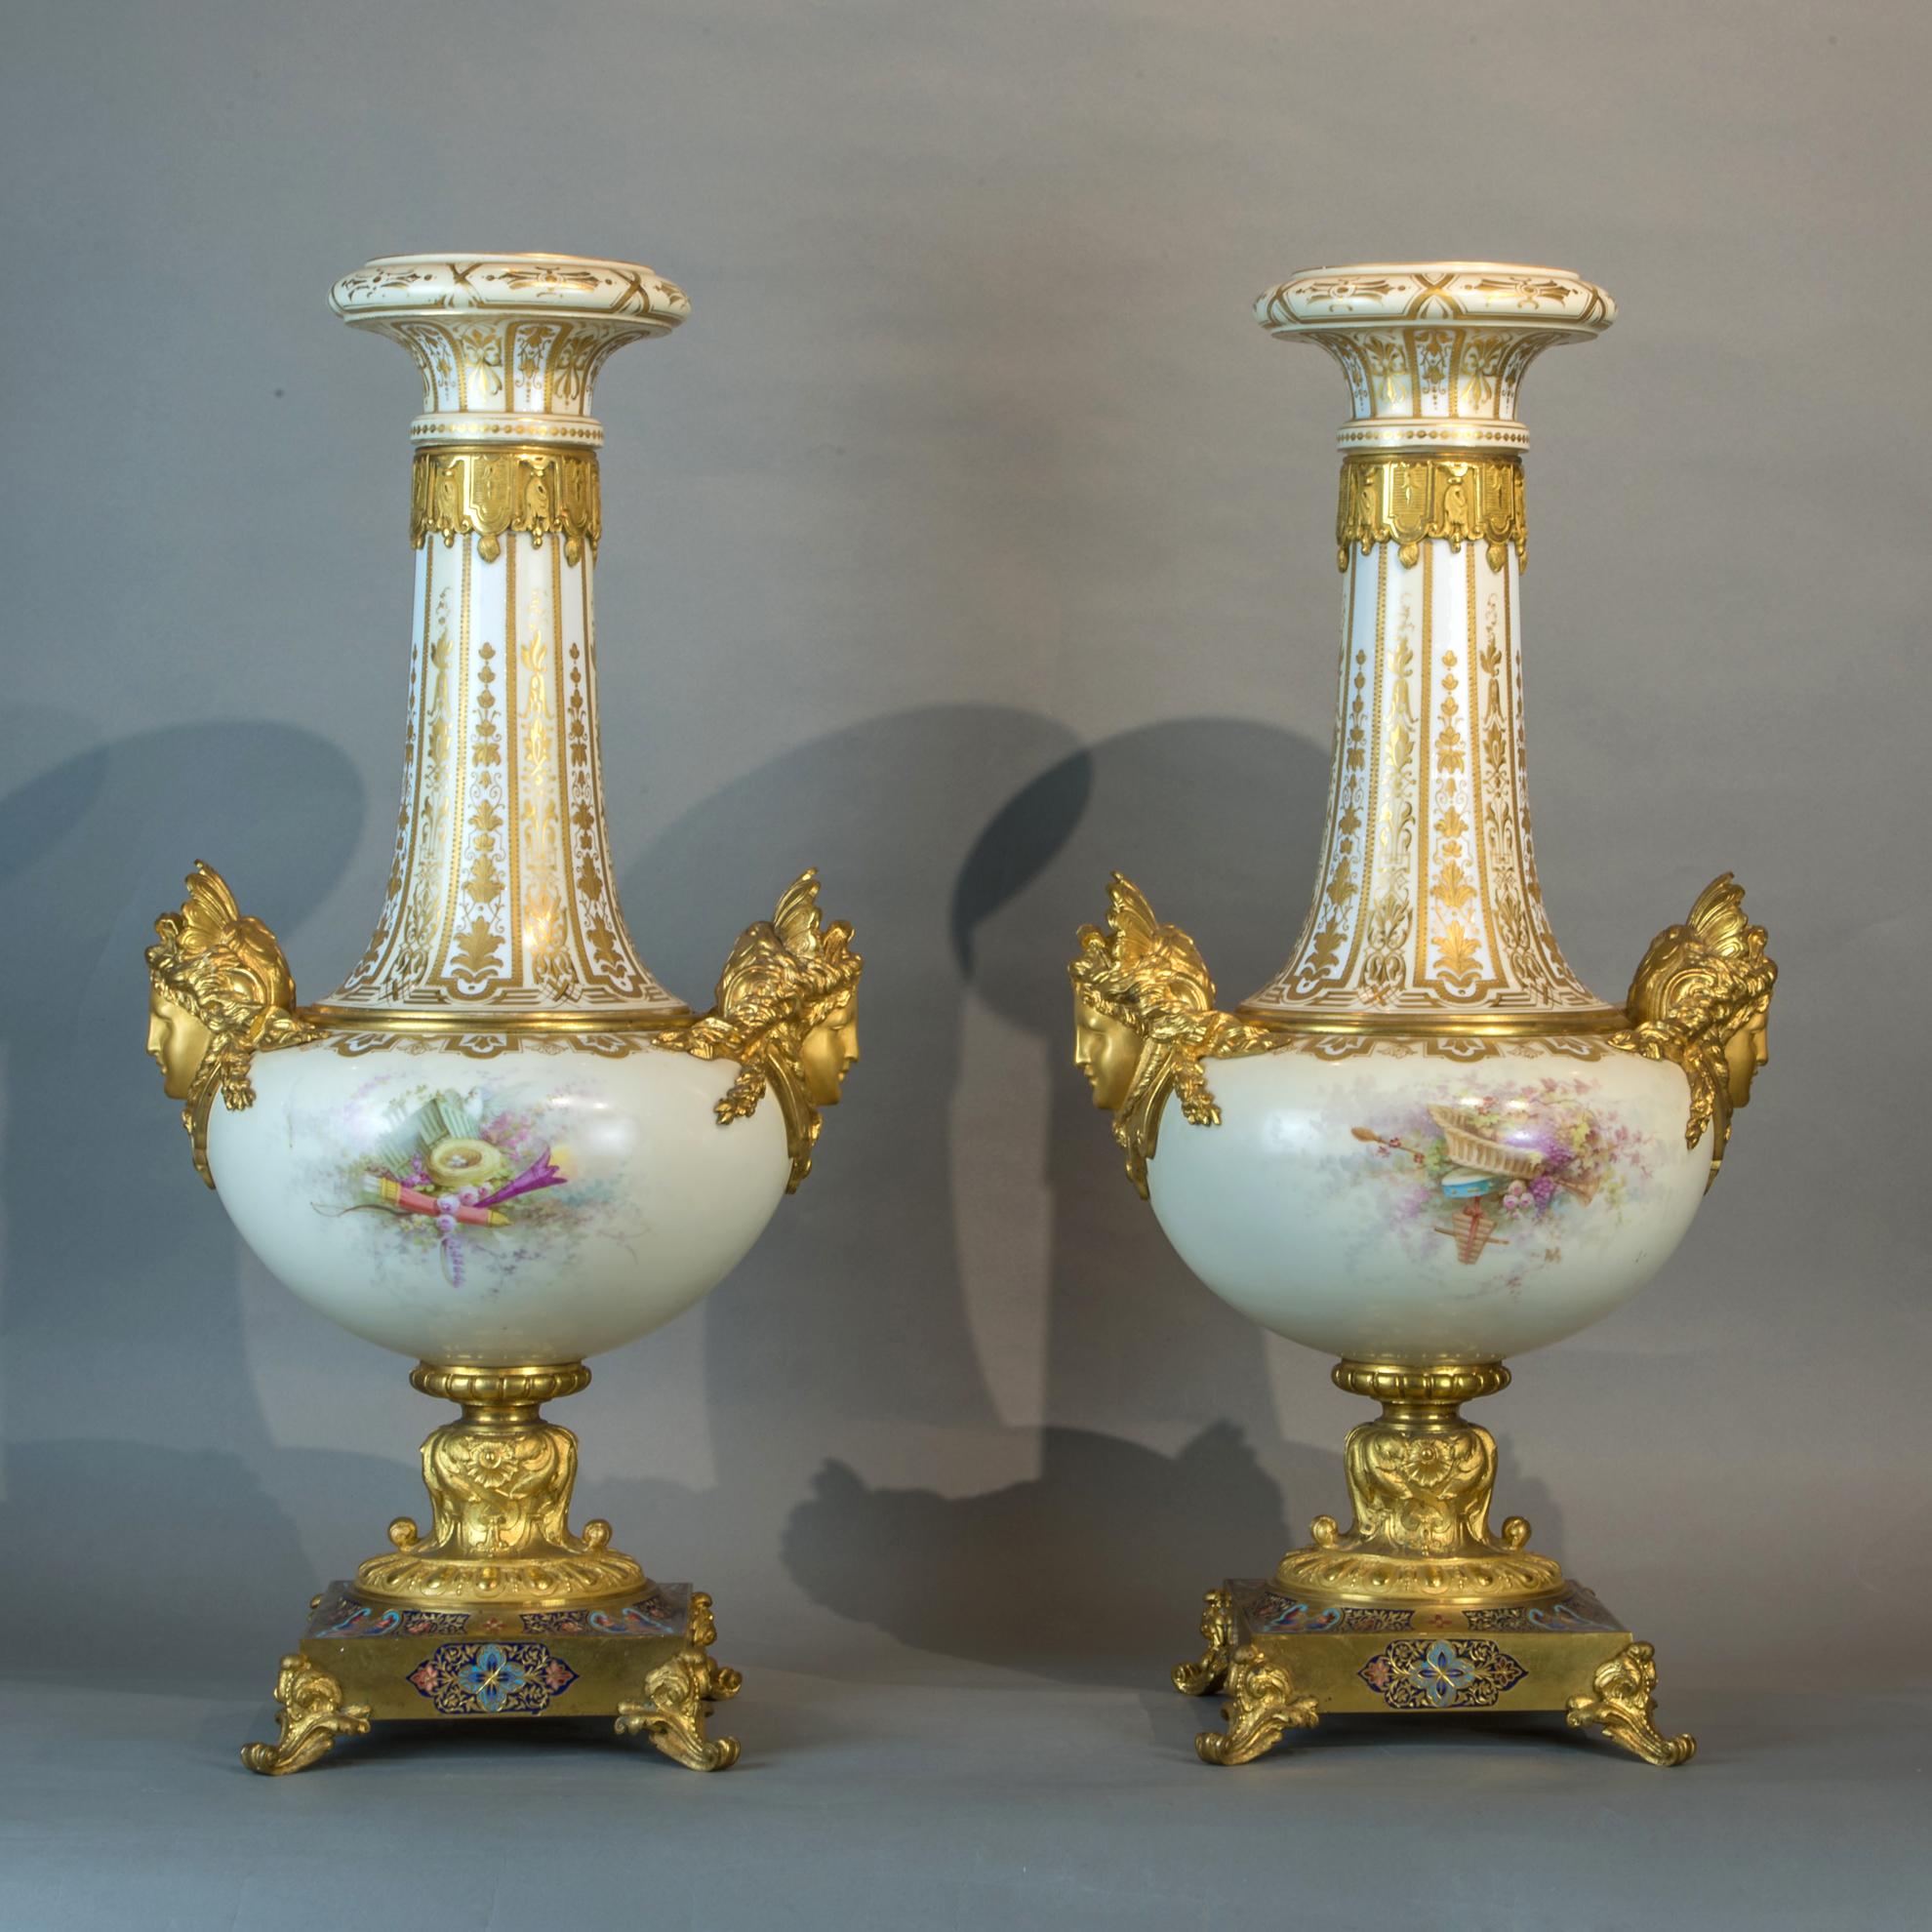 Gilt Pair of Ormolu-Mounted Sèvres-style Porcelain Champlevé Vases For Sale